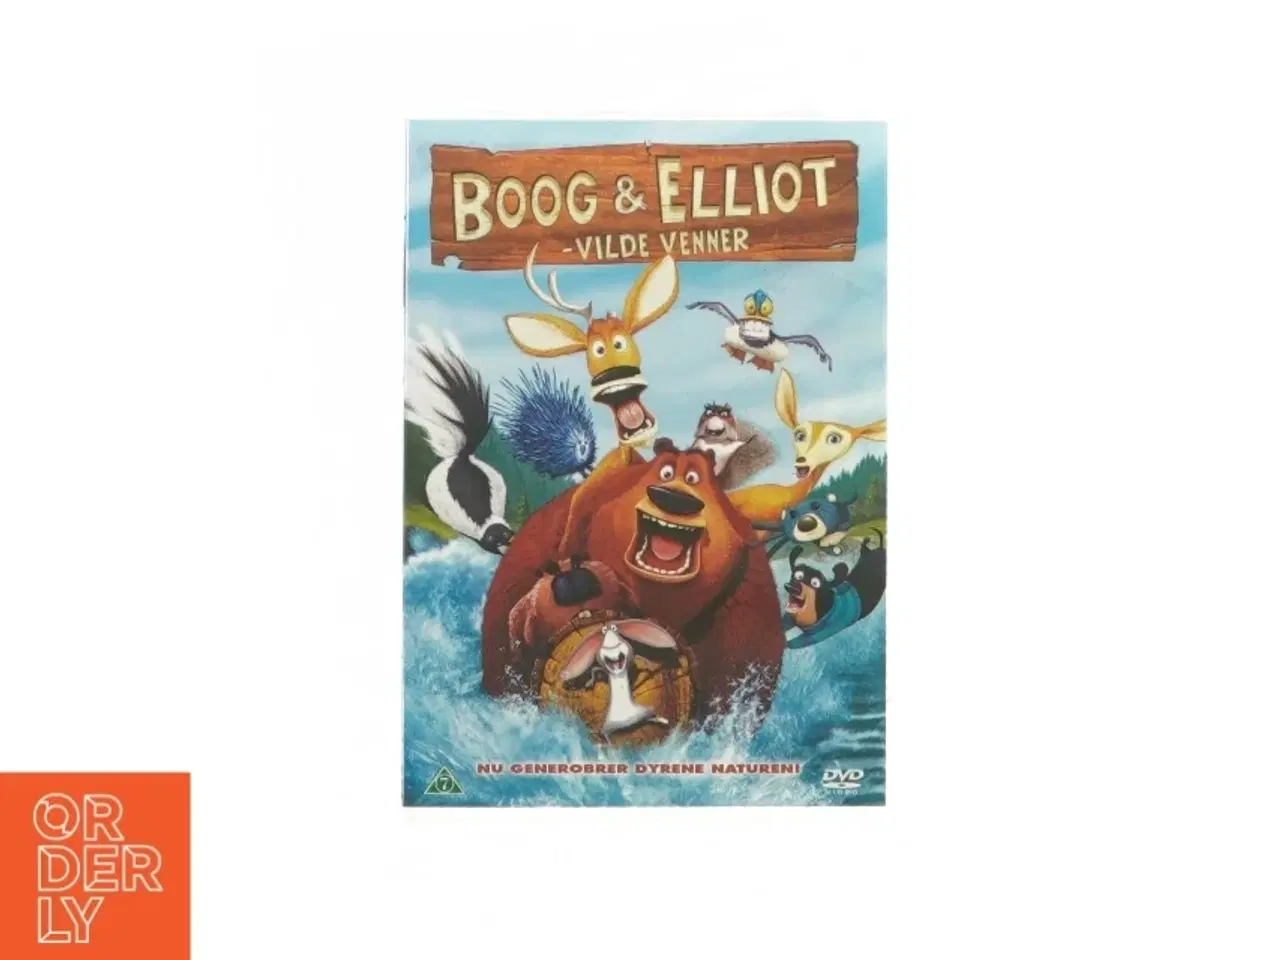 Billede 1 - Boog & Elliot - Vilde venner (DVD)